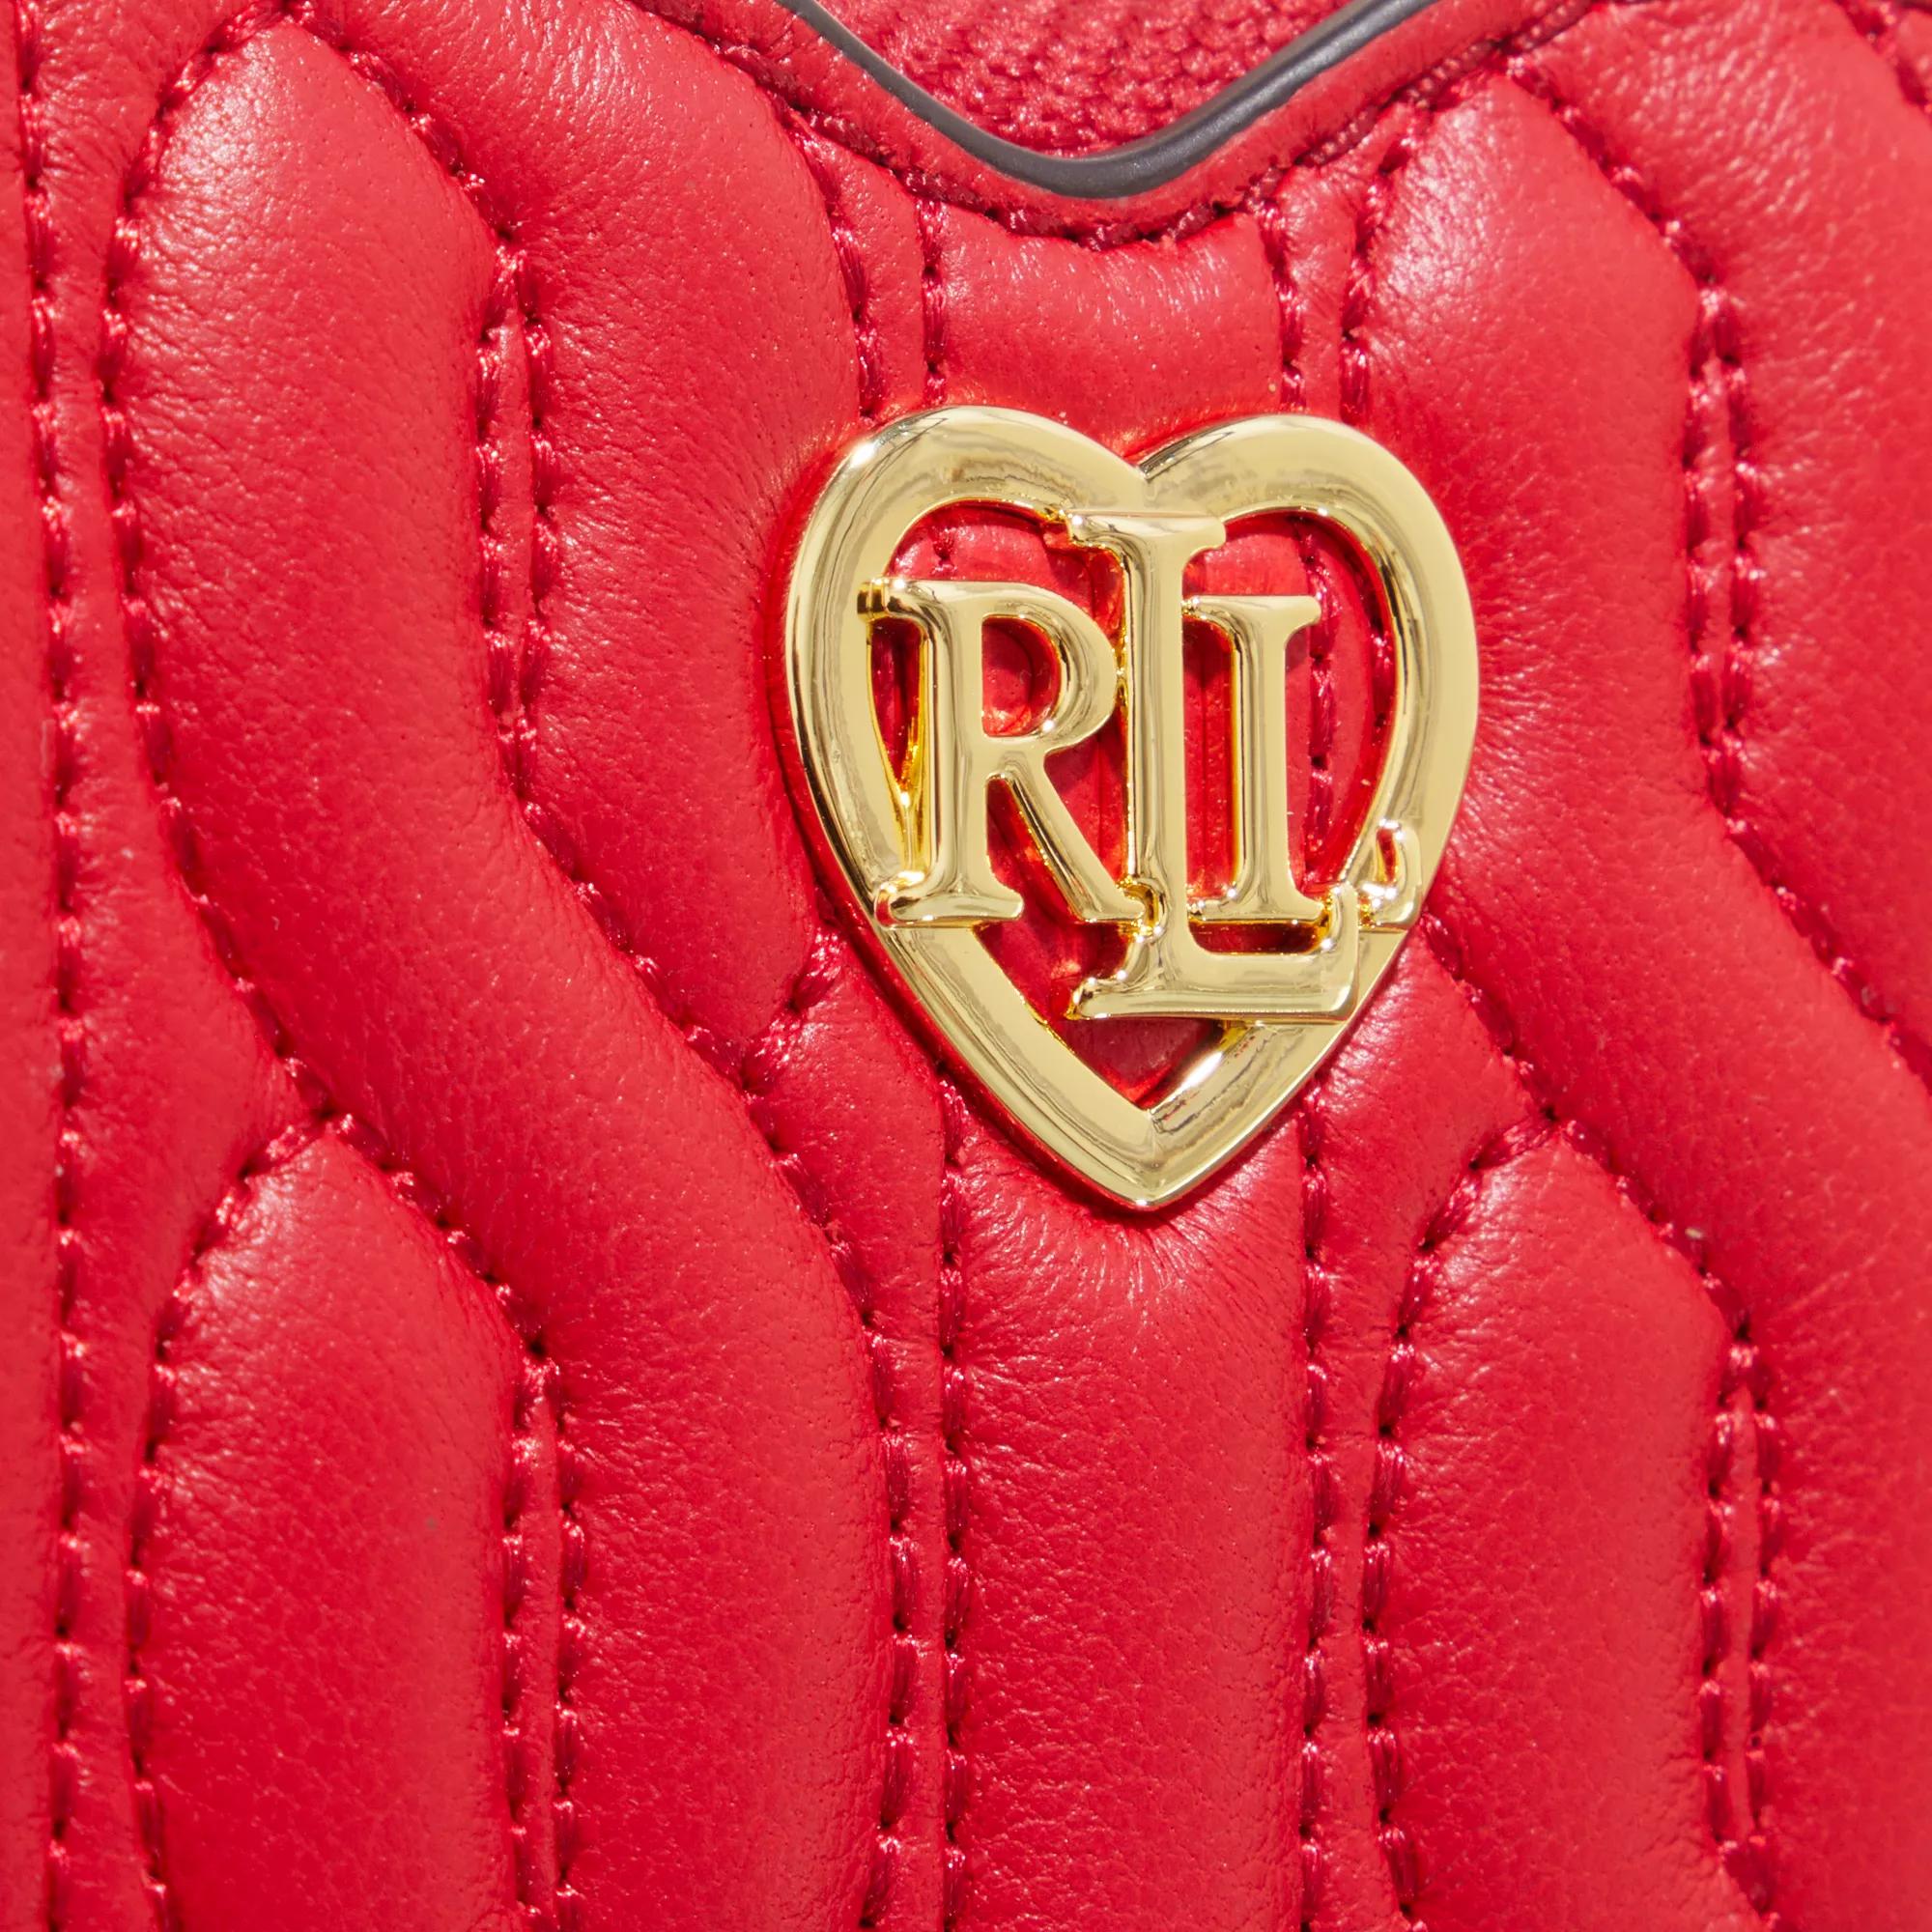 Lauren Ralph Lauren Crossbody bags Mini Heart Pouch Small in rood